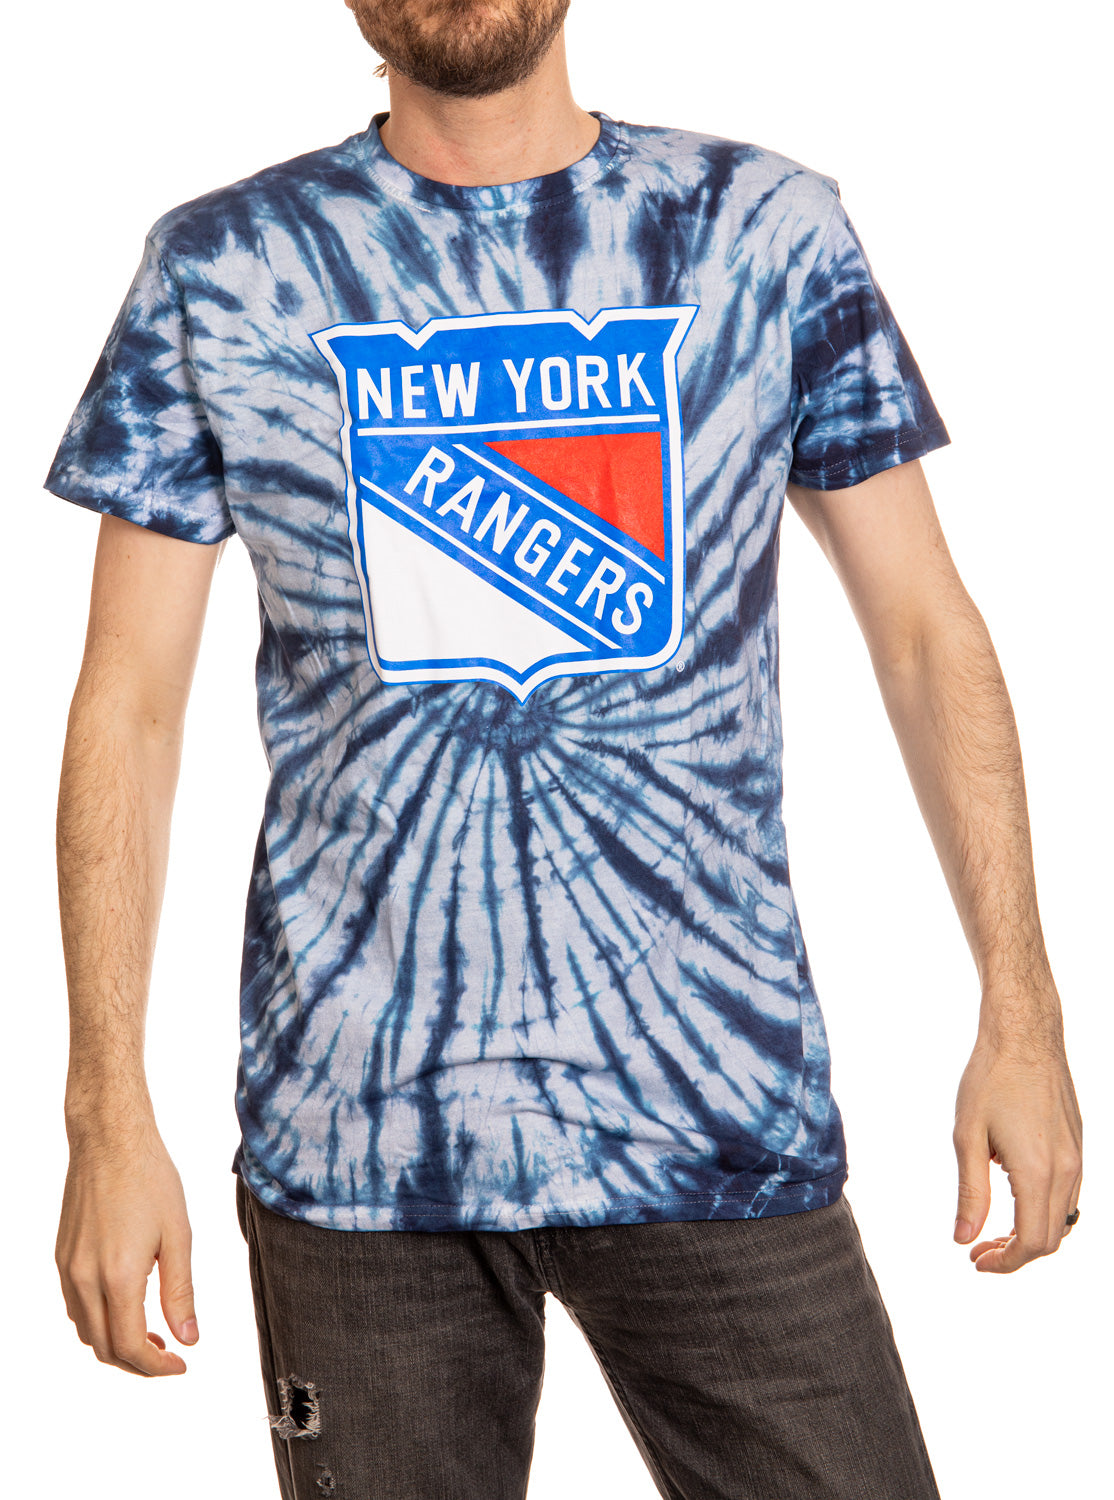 New York Rangers Spiral Tie Dye T-Shirt